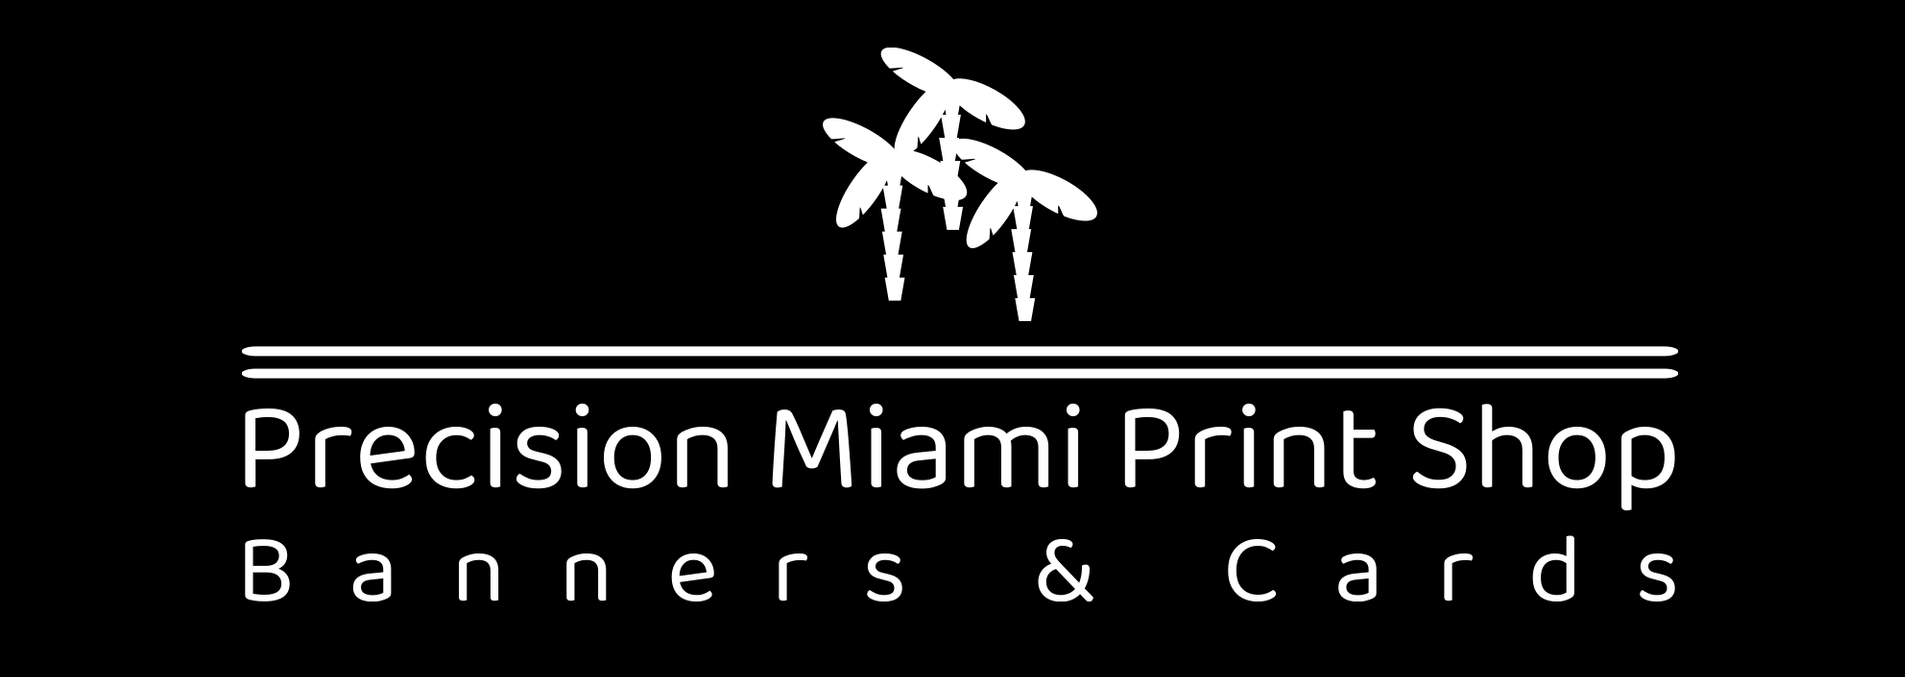 Precision Miami Print Shop Banners & Cards